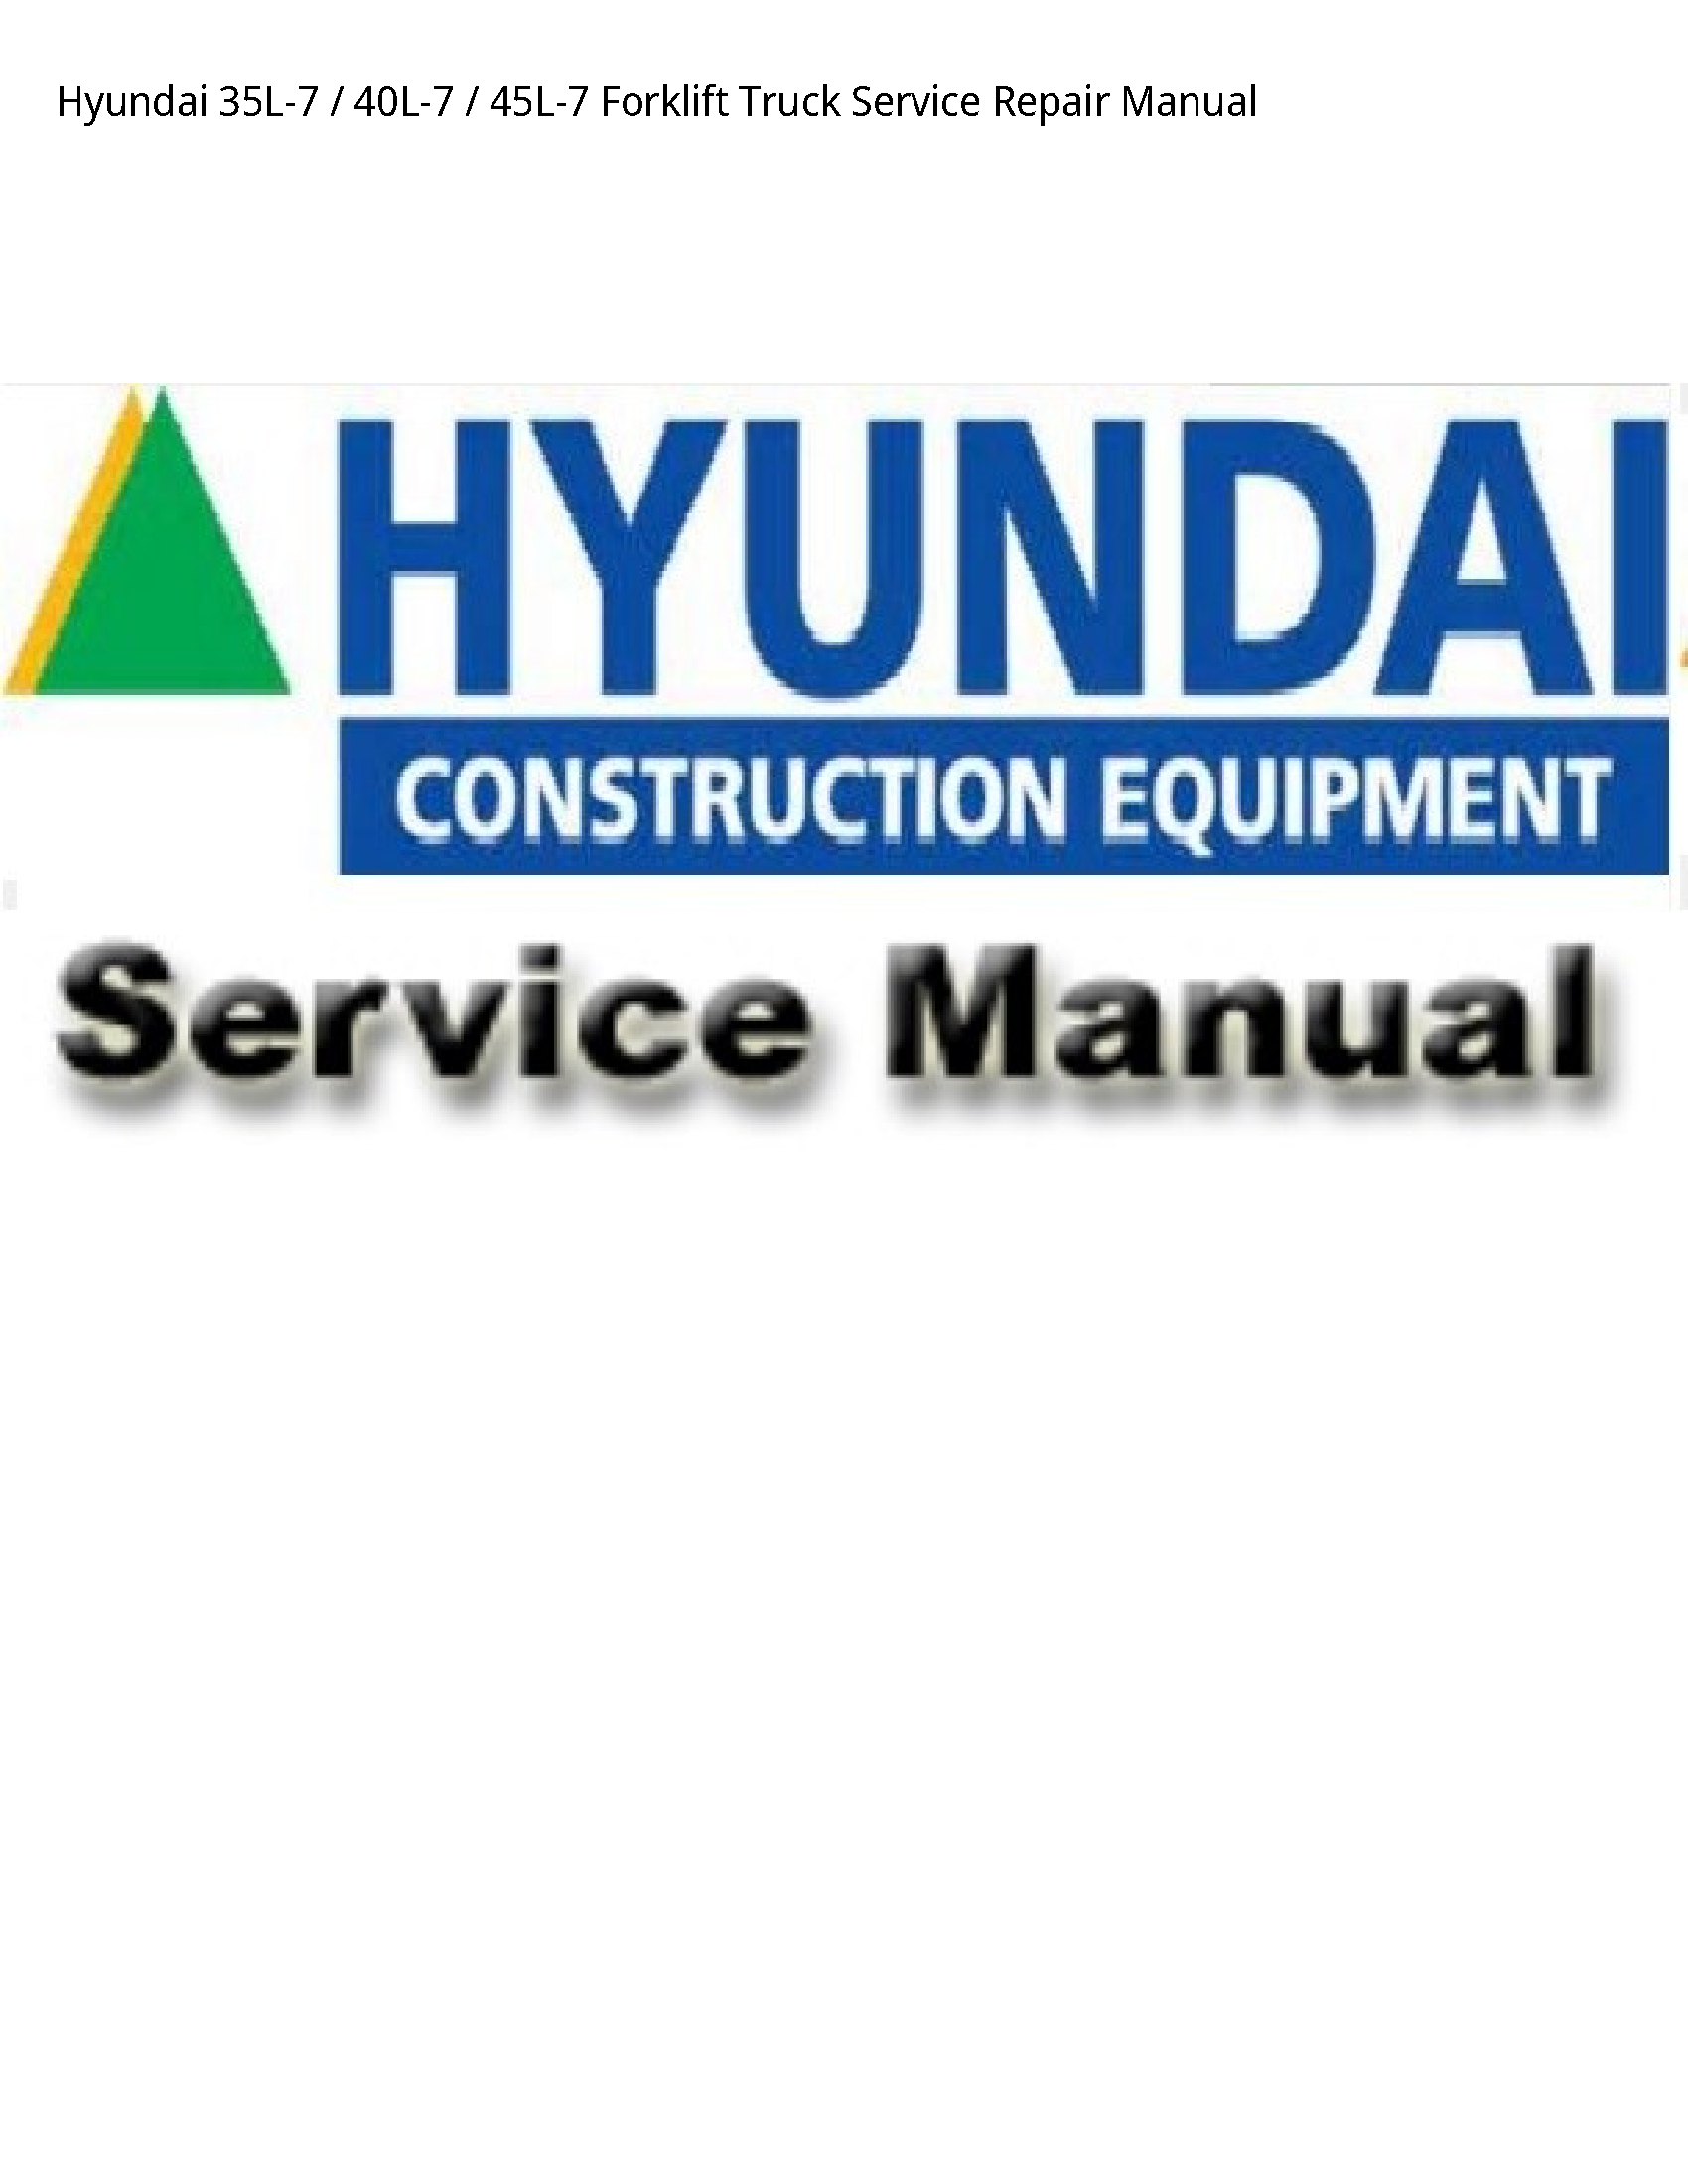 Hyundai 35L-7 Forklift Truck manual